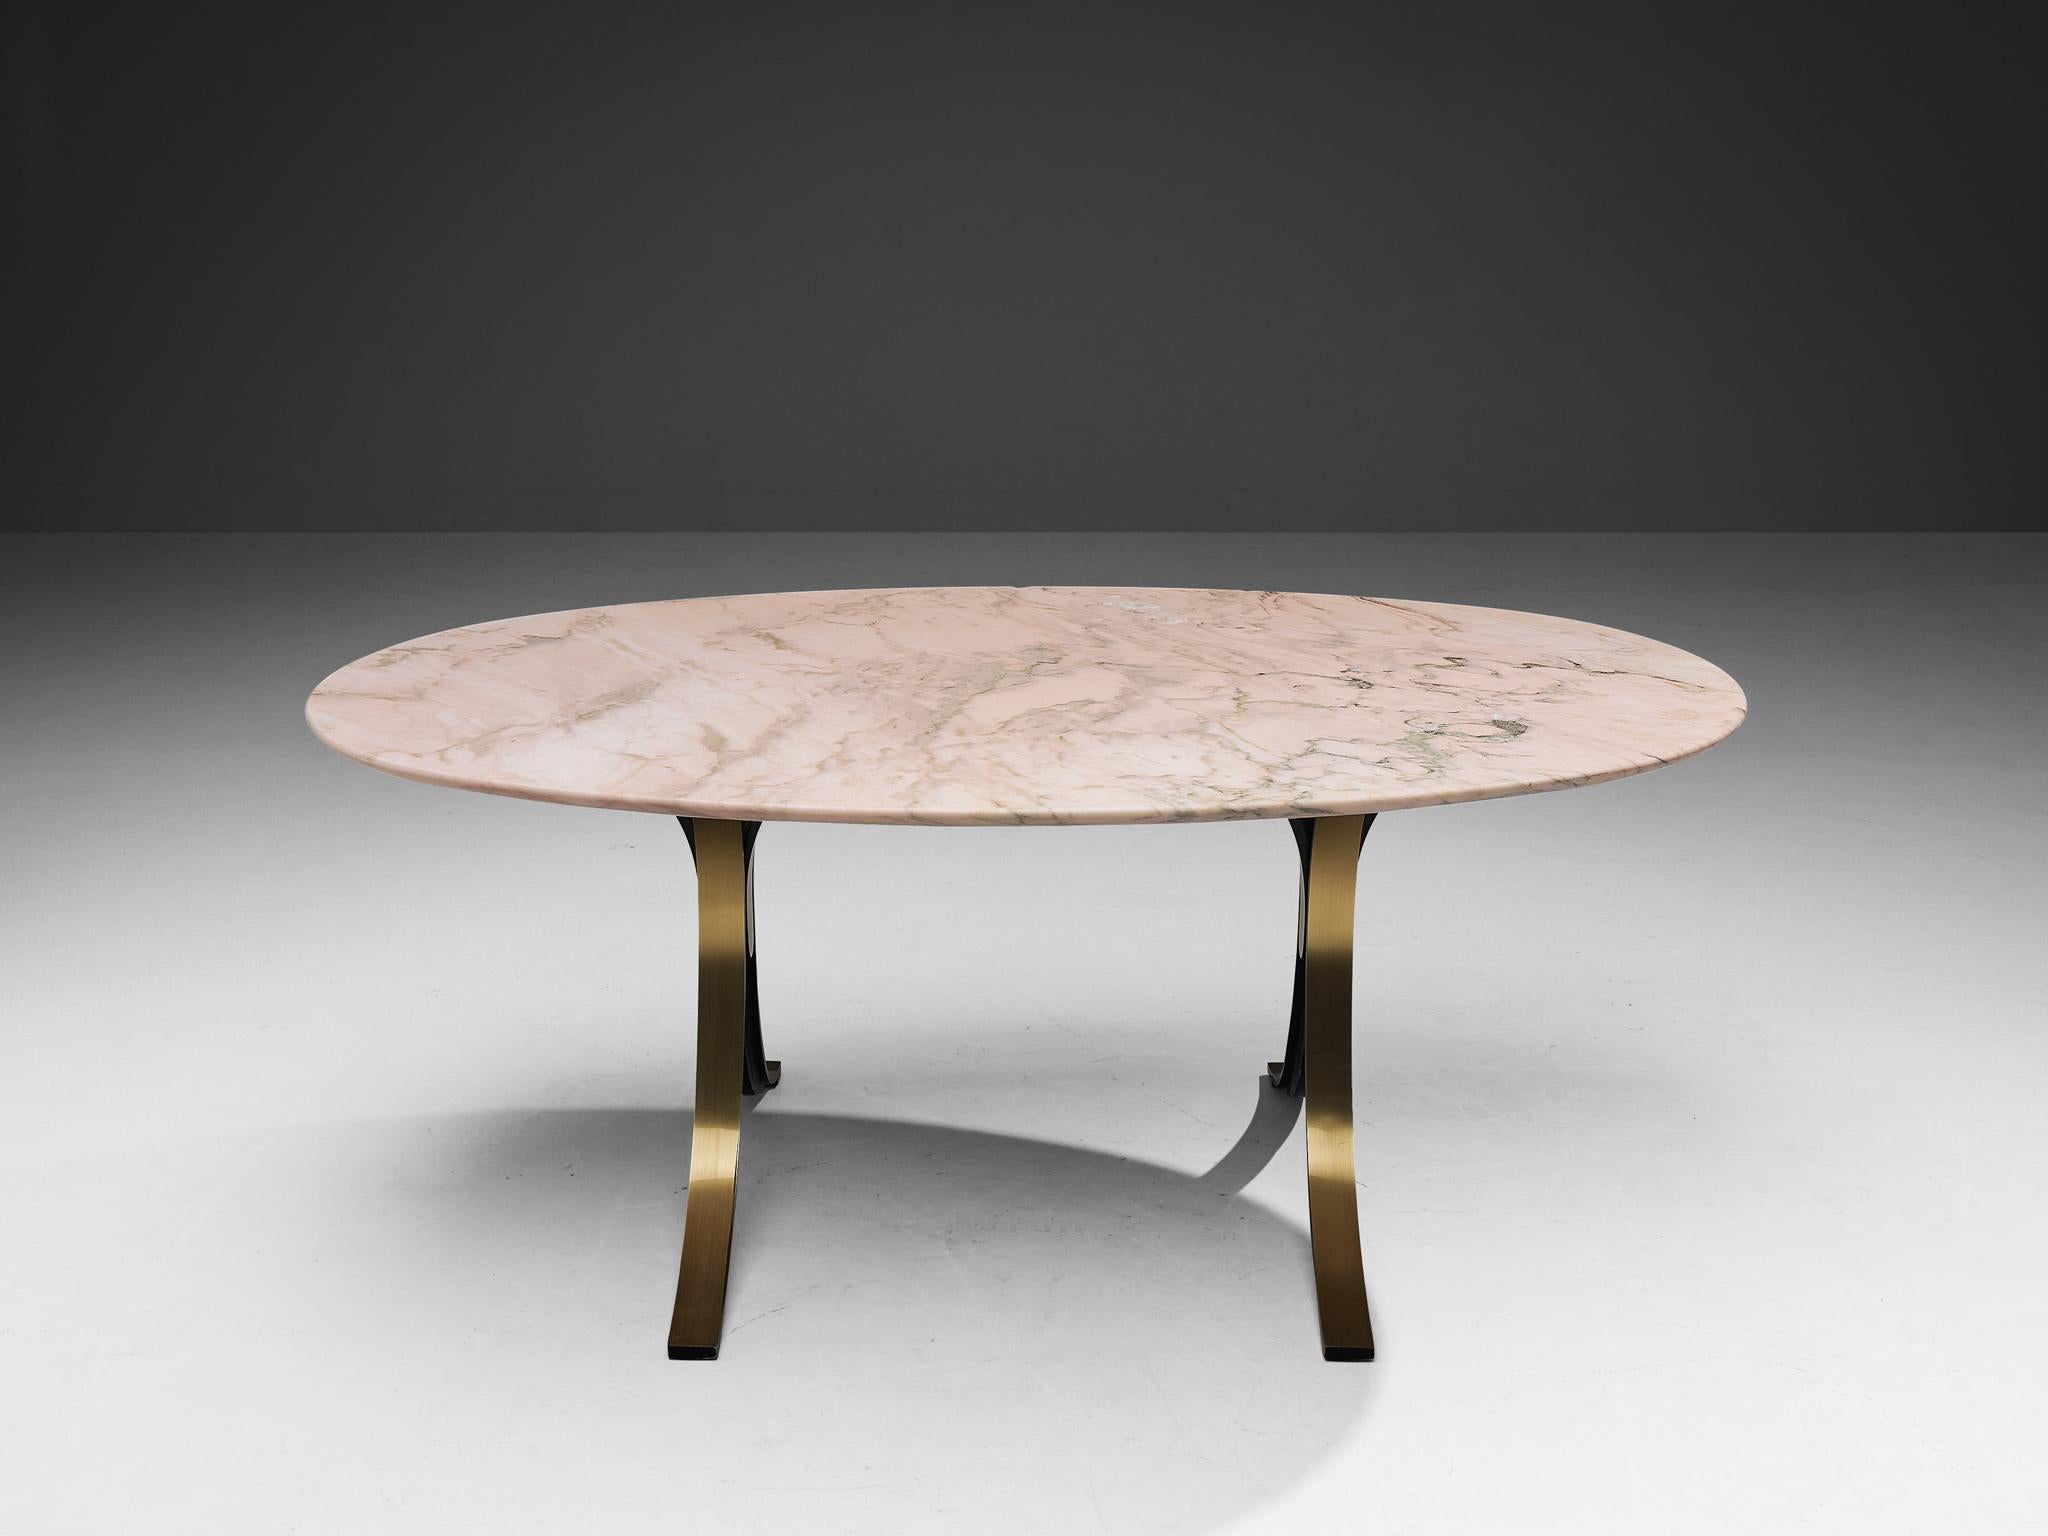 Italian Osvaldo Borsani & Eugenio Gerli for Tecno Oval Dining Table in Marble  For Sale